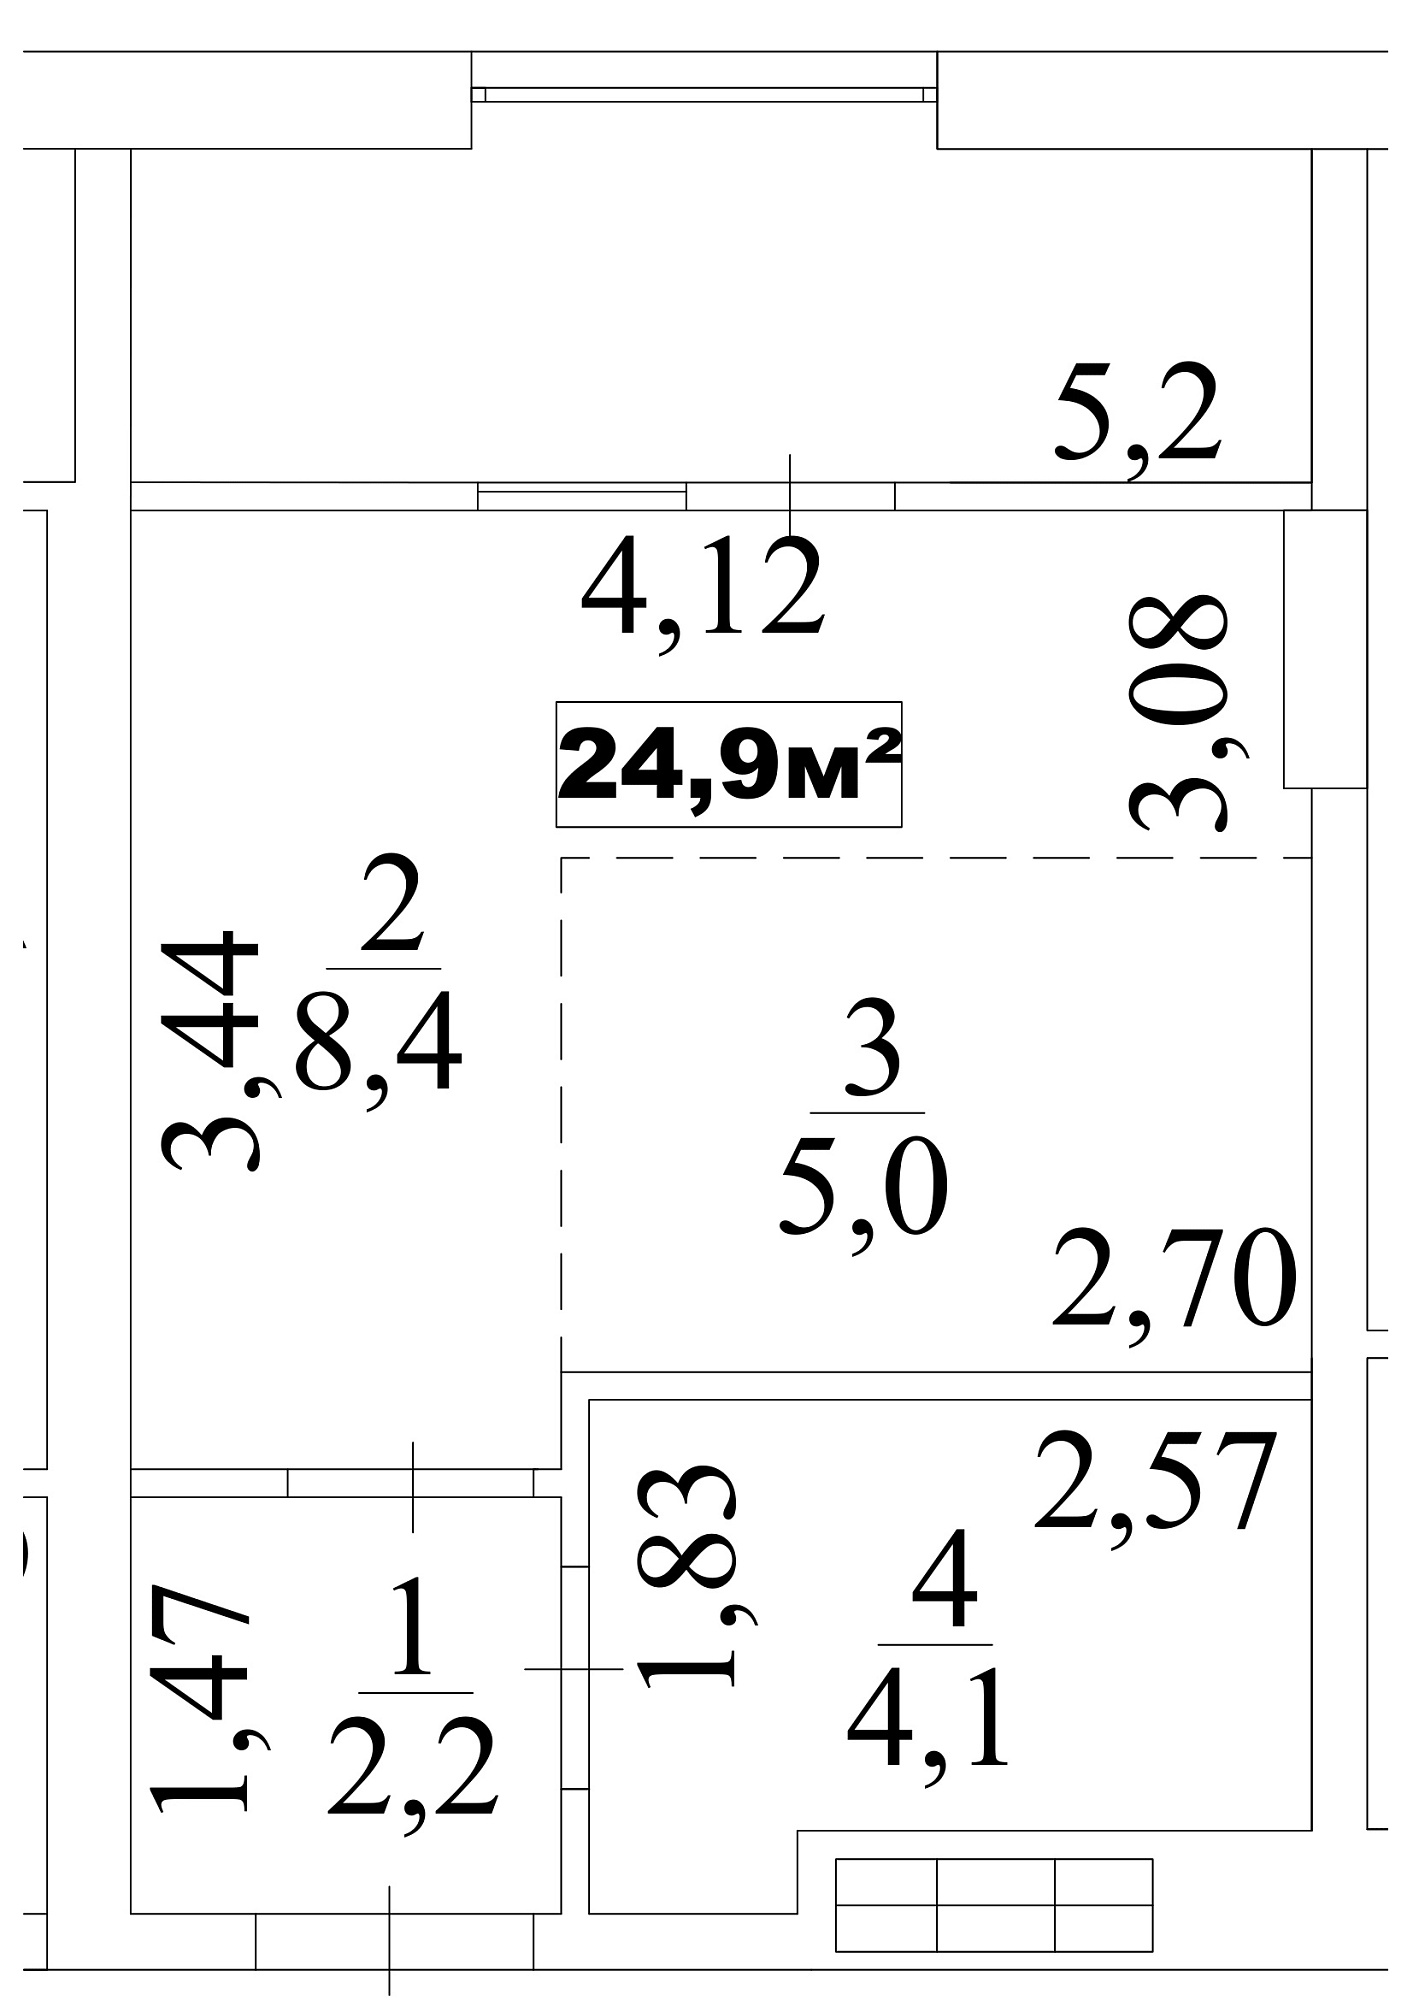 Planning Smart flats area 24.9m2, AB-10-07/0057в.